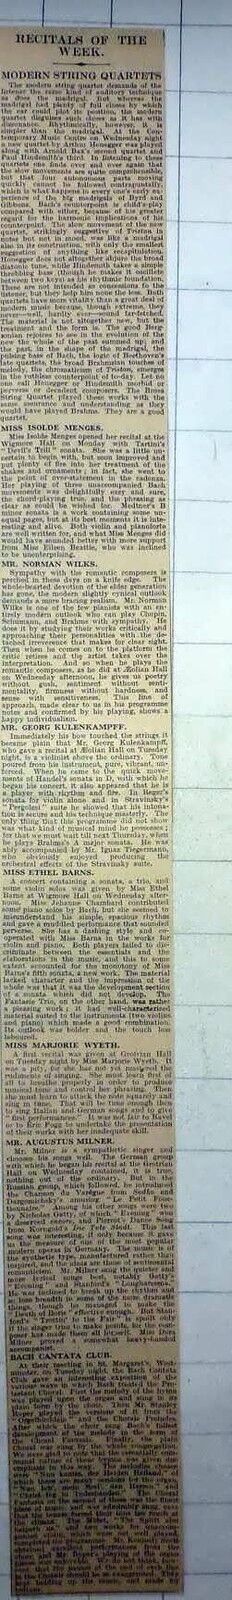 1927 Weeks Recitals, Isolde Menges, Ethel Barns, Mr Augustus Milner